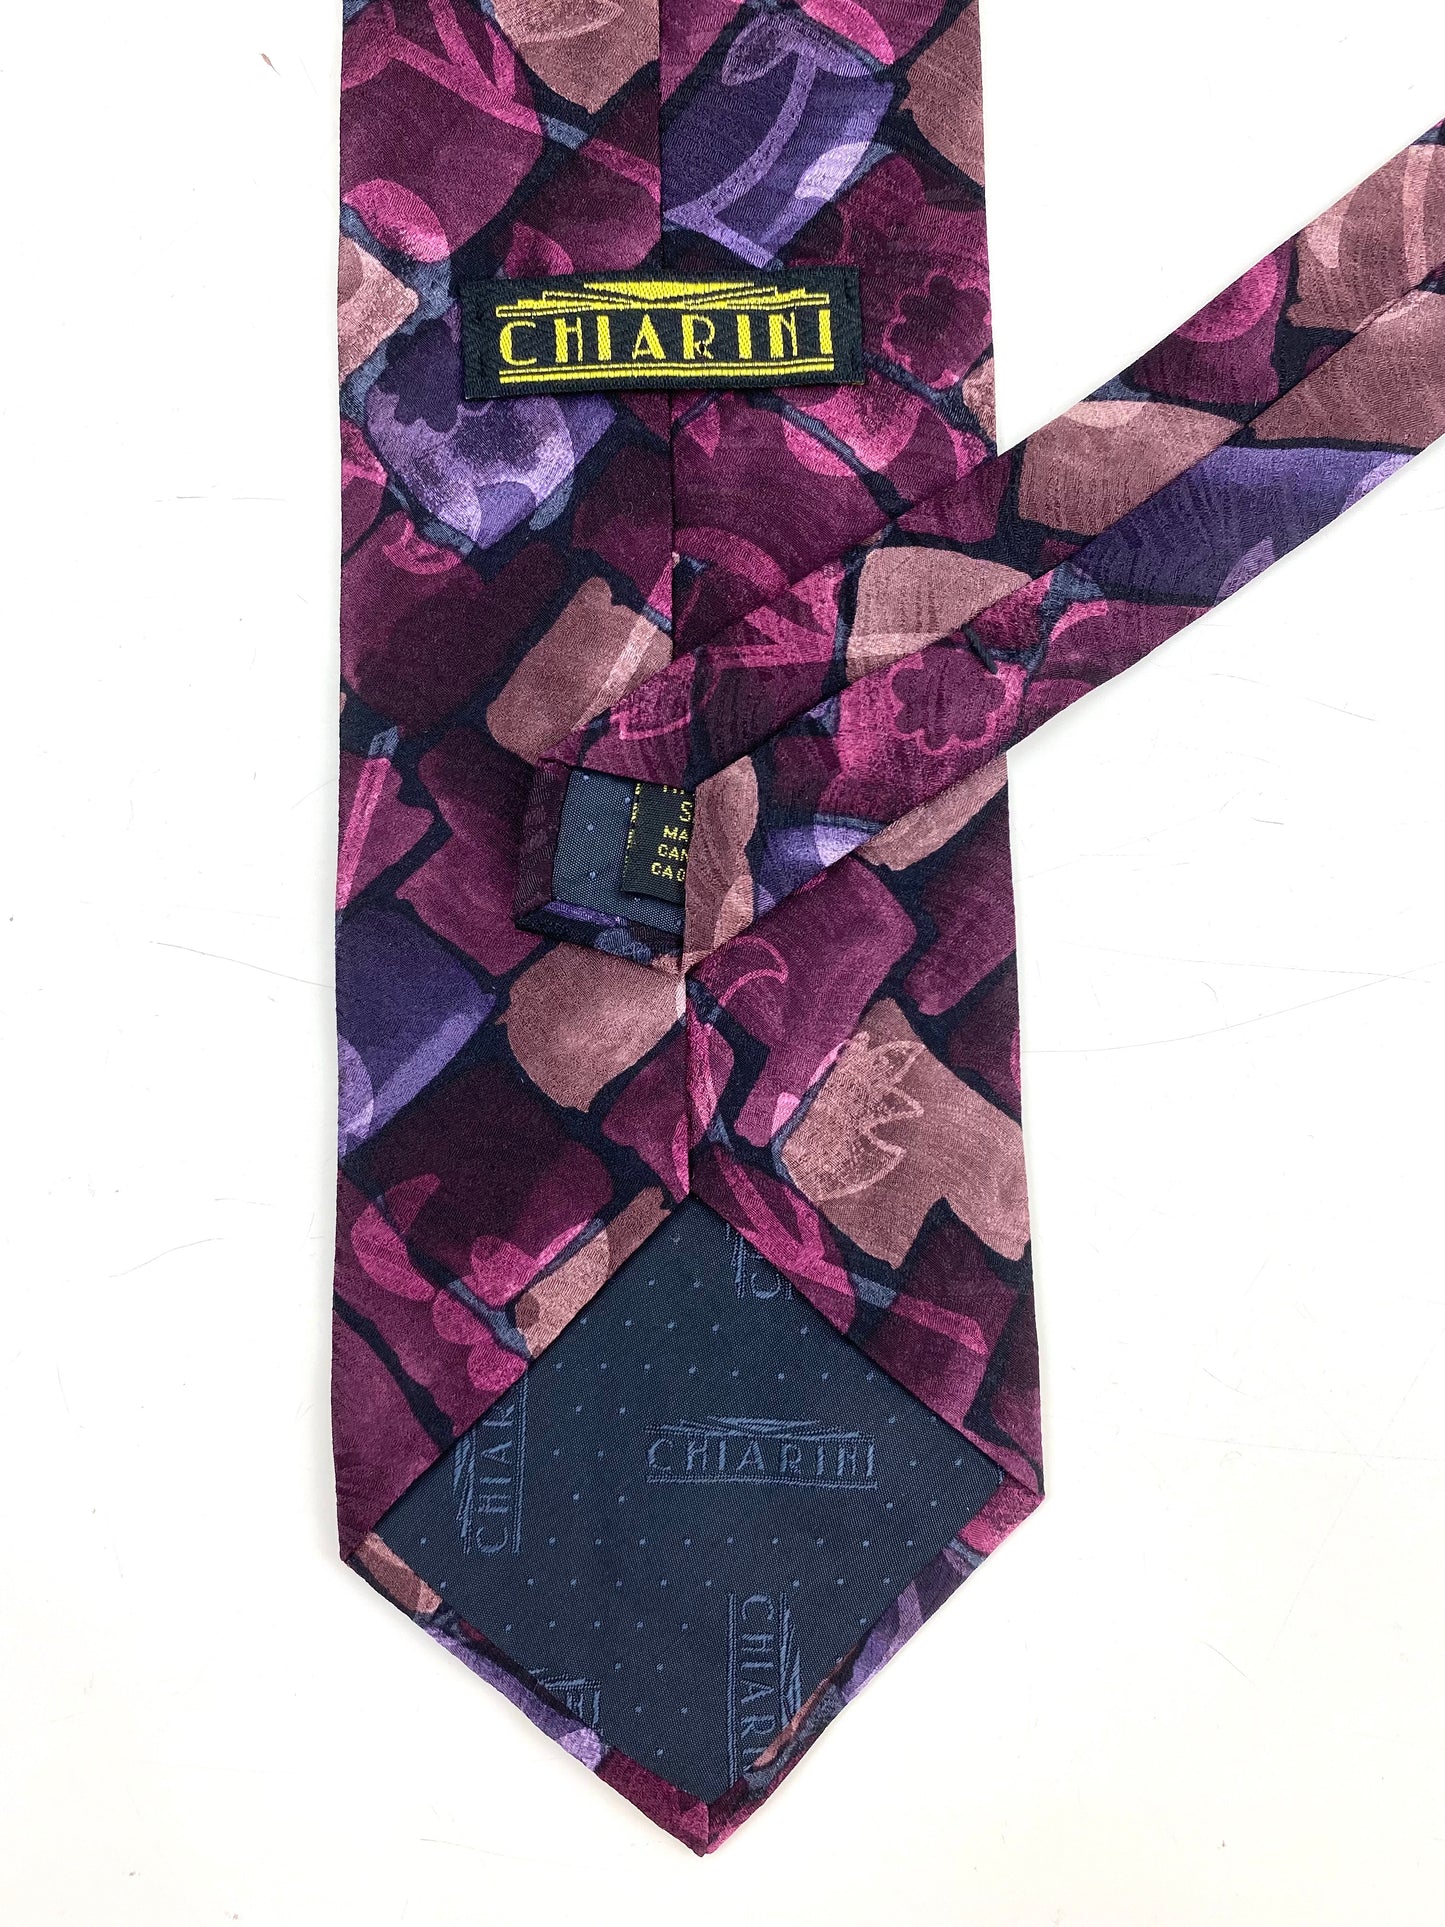 90s Deadstock Silk Necktie, Men's Vintage Purple Abstract Floral Pattern Tie, NOS